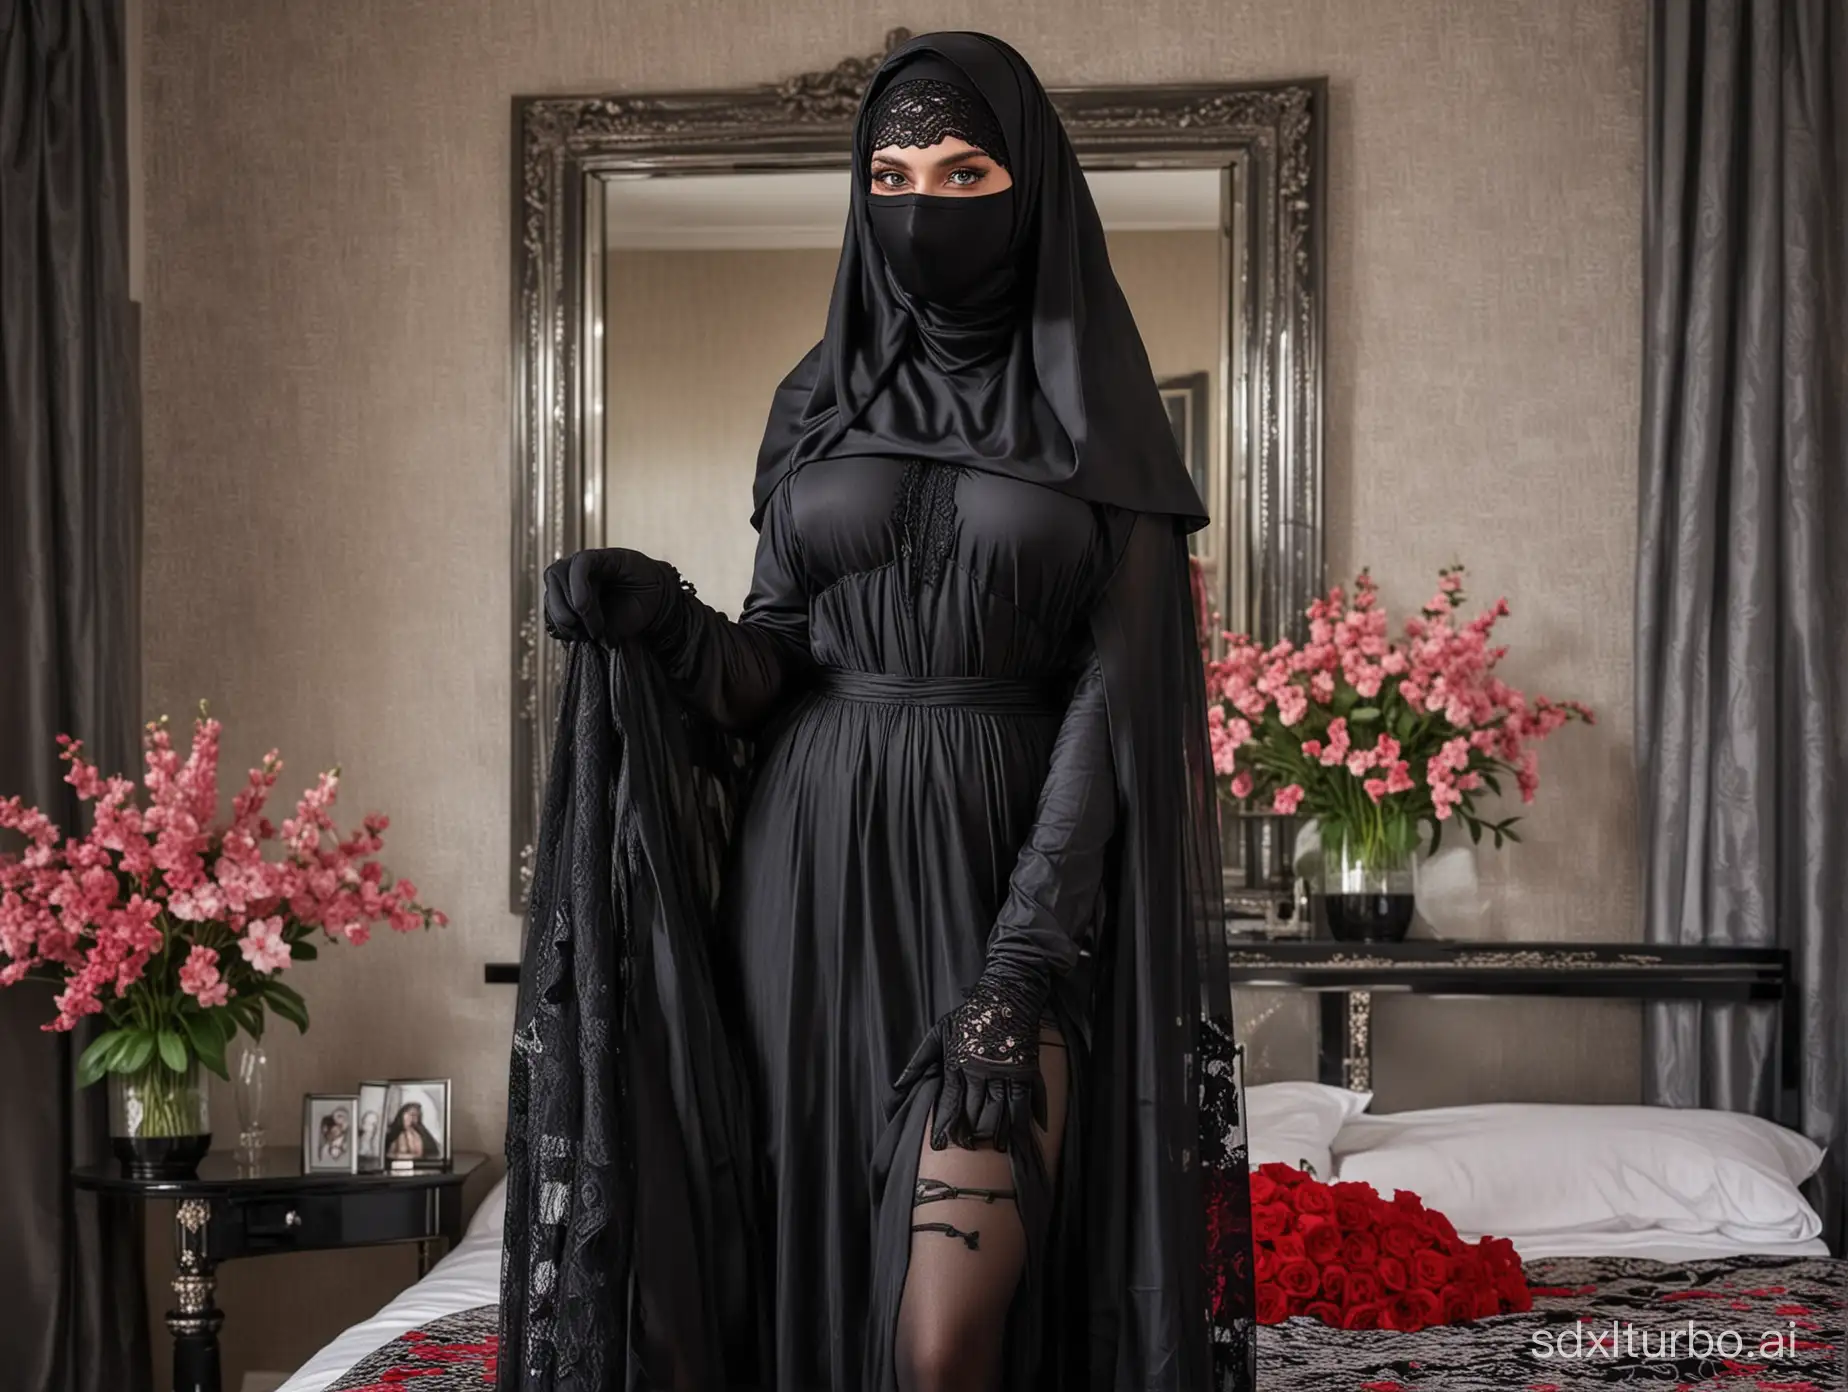 Feminized-Sissy-Man-in-Grey-Burqa-and-Black-Hijab-in-Luxurious-Setting